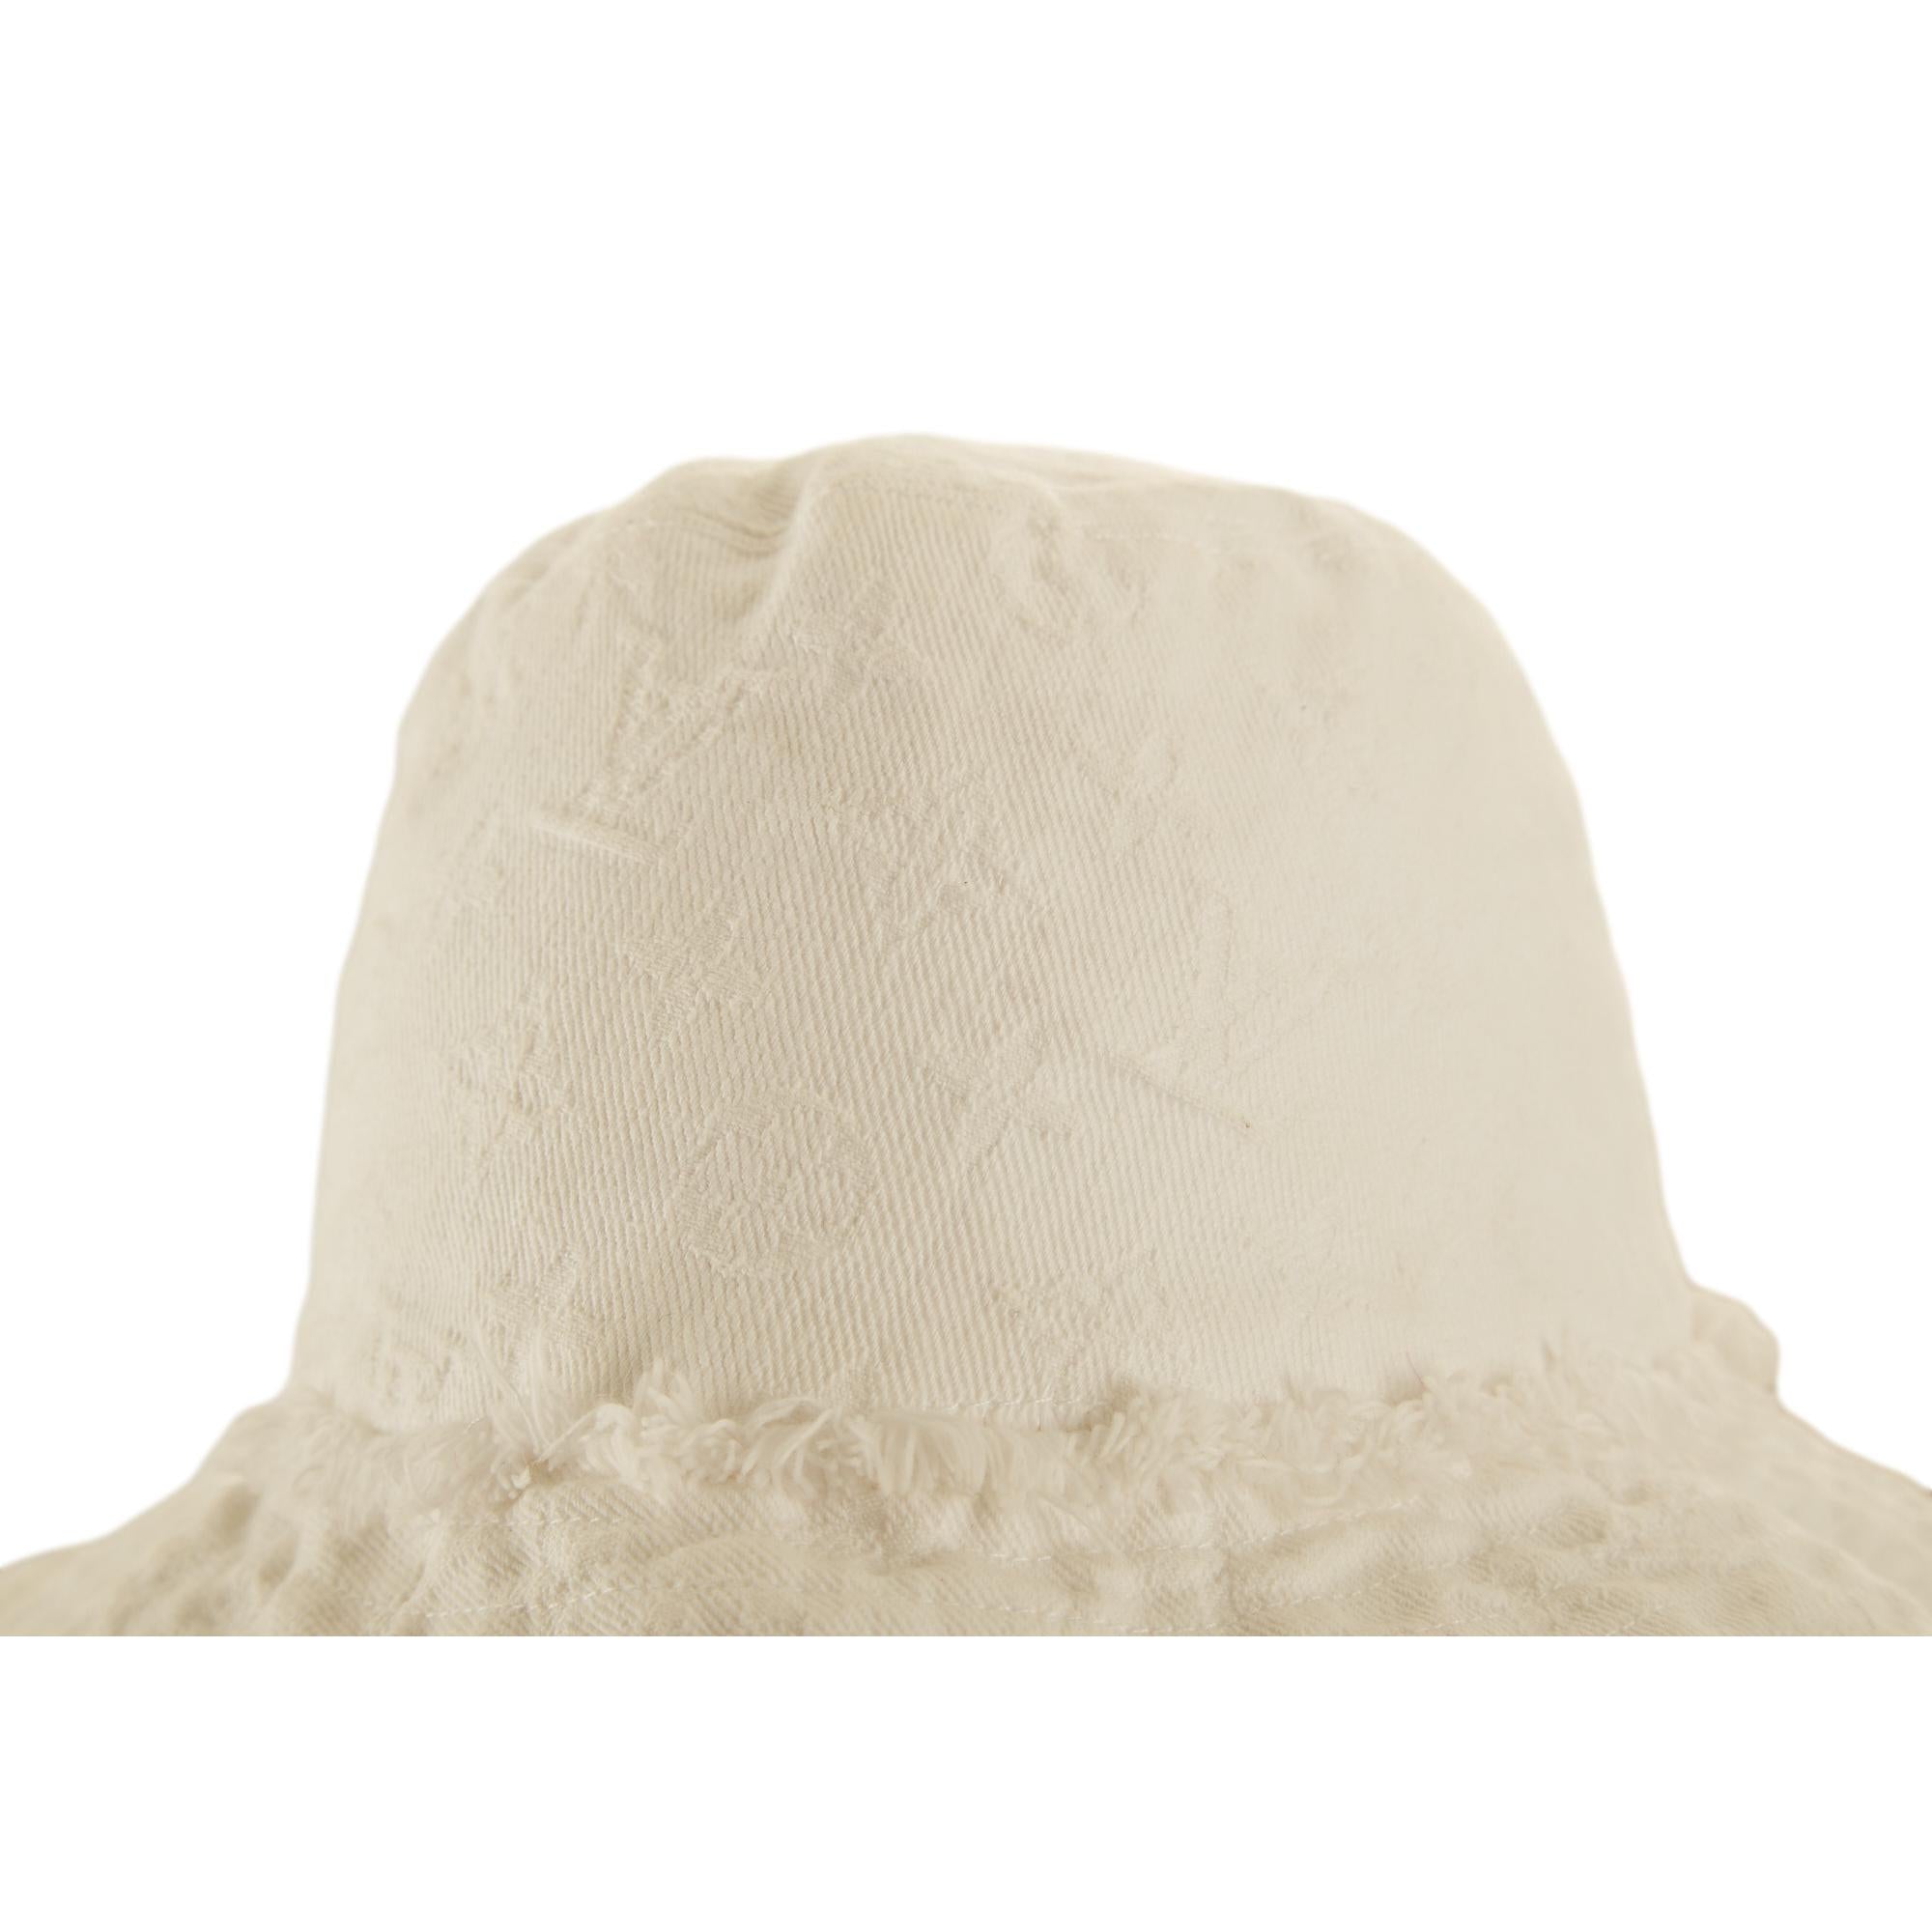 Louis Vuitton Louis Vuitton LV Cup White Leather Bucket Hat Limited